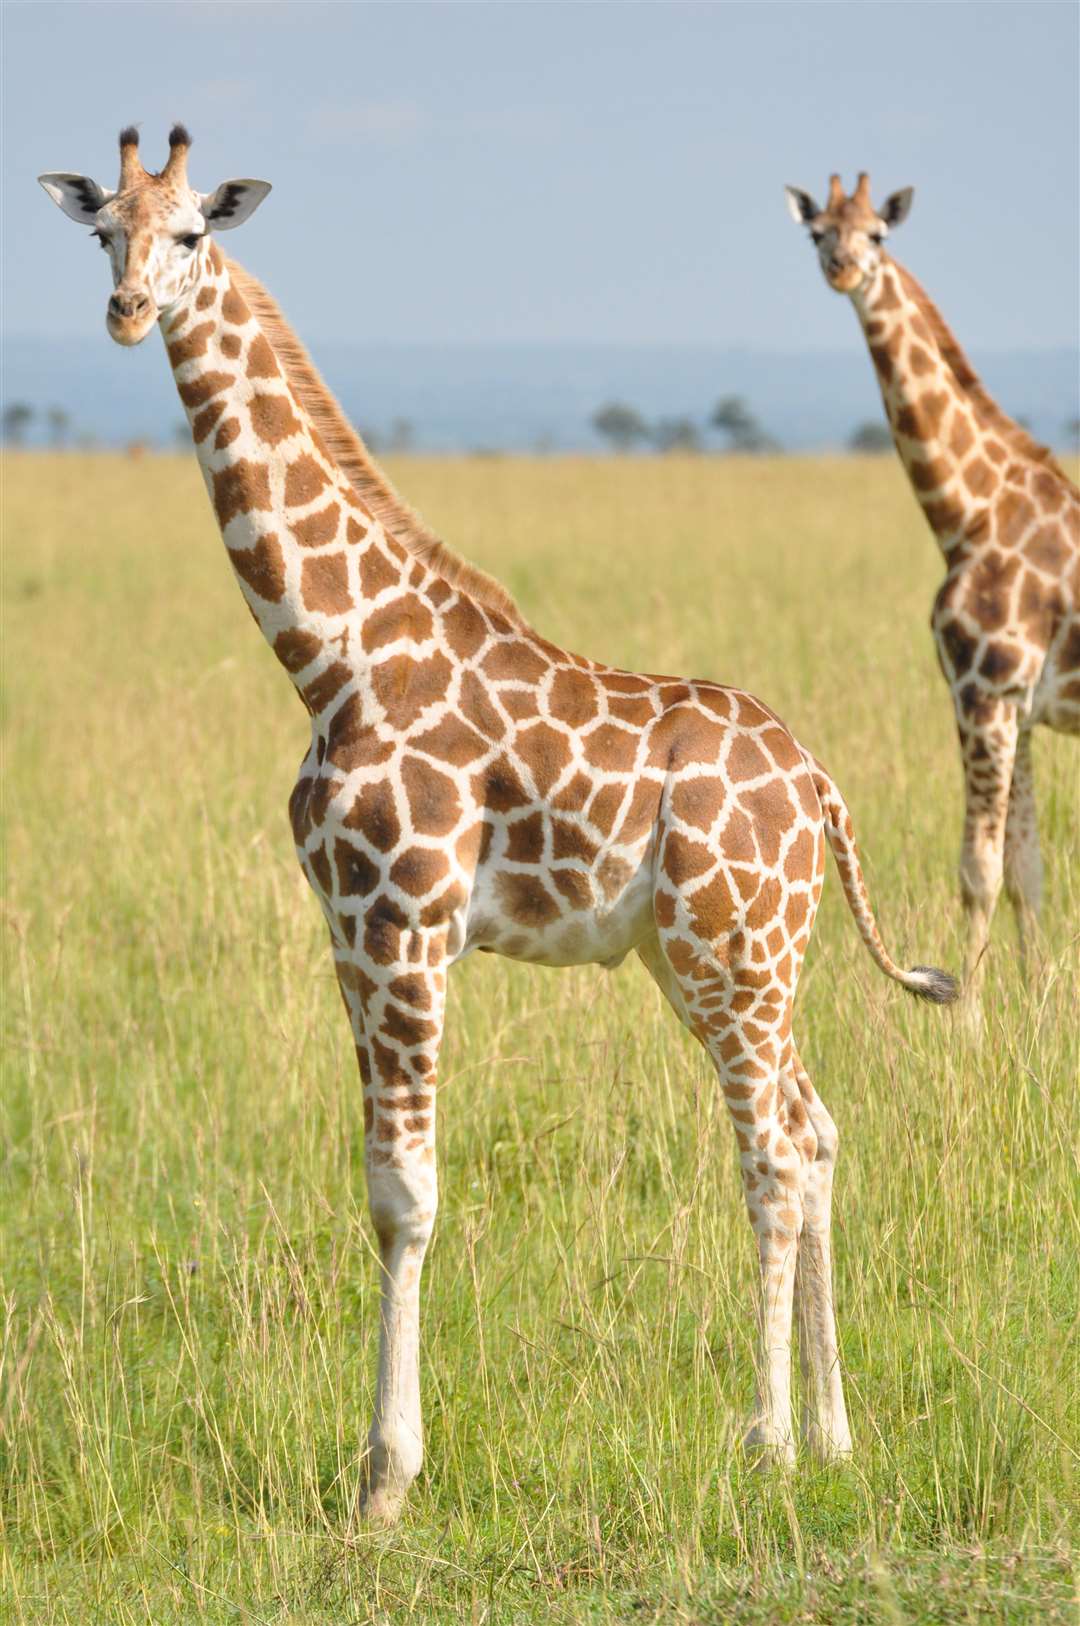 A Nubian giraffe pictured at Murchison Falls, Uganda.